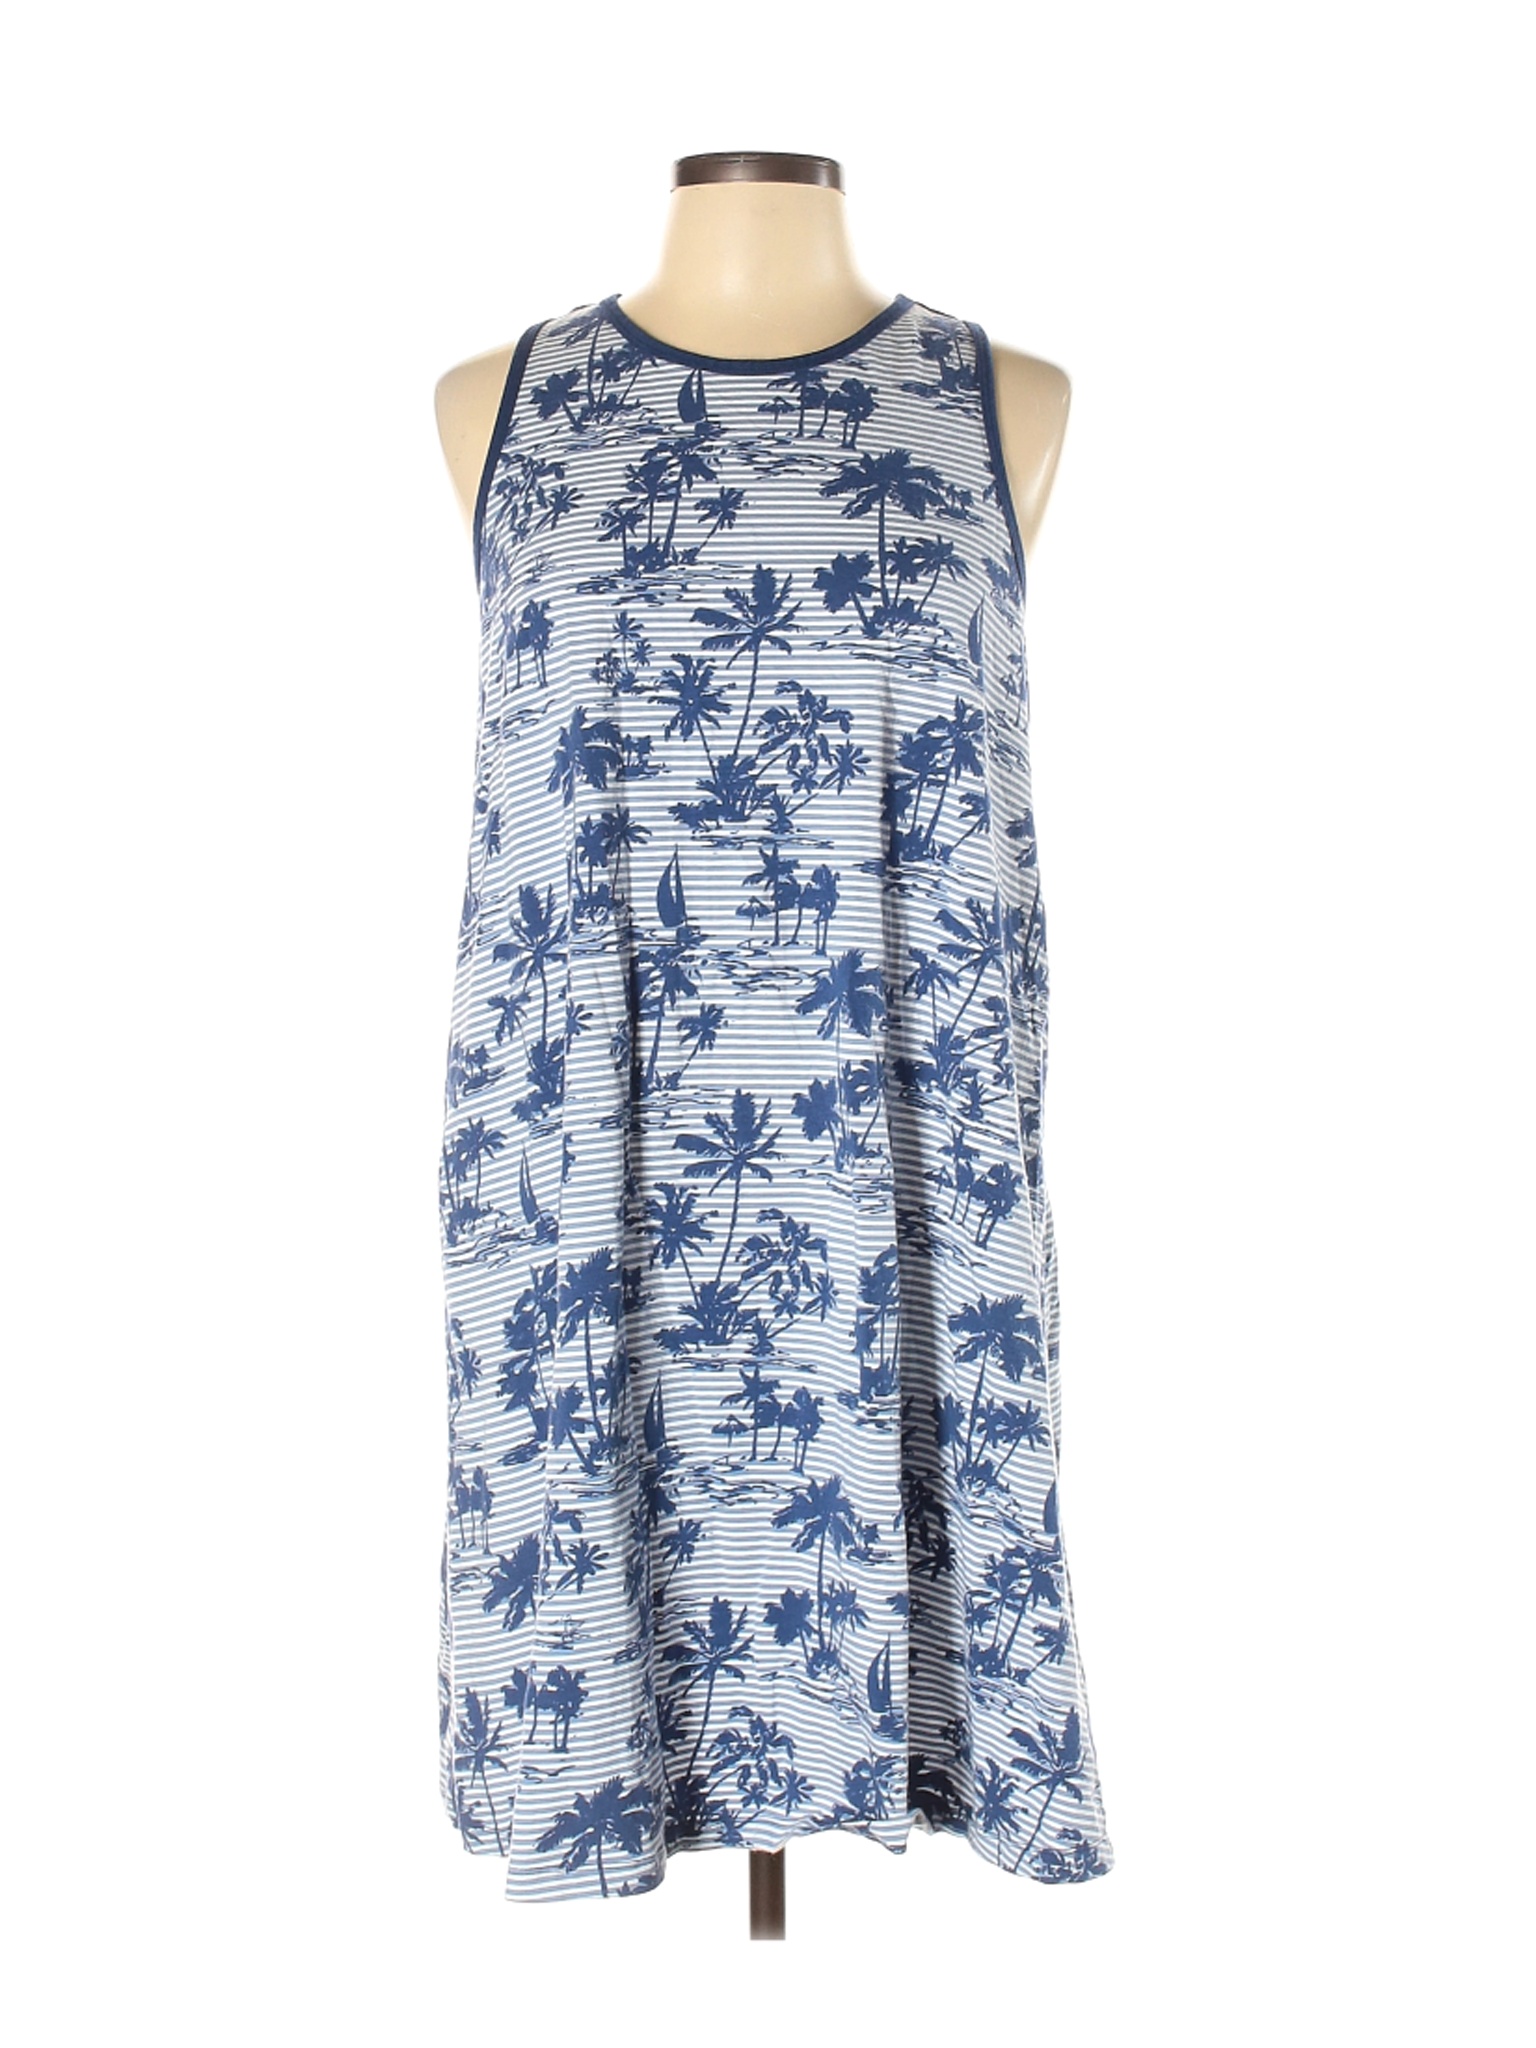 Vineyard Vines Women Blue Casual Dress L | eBay